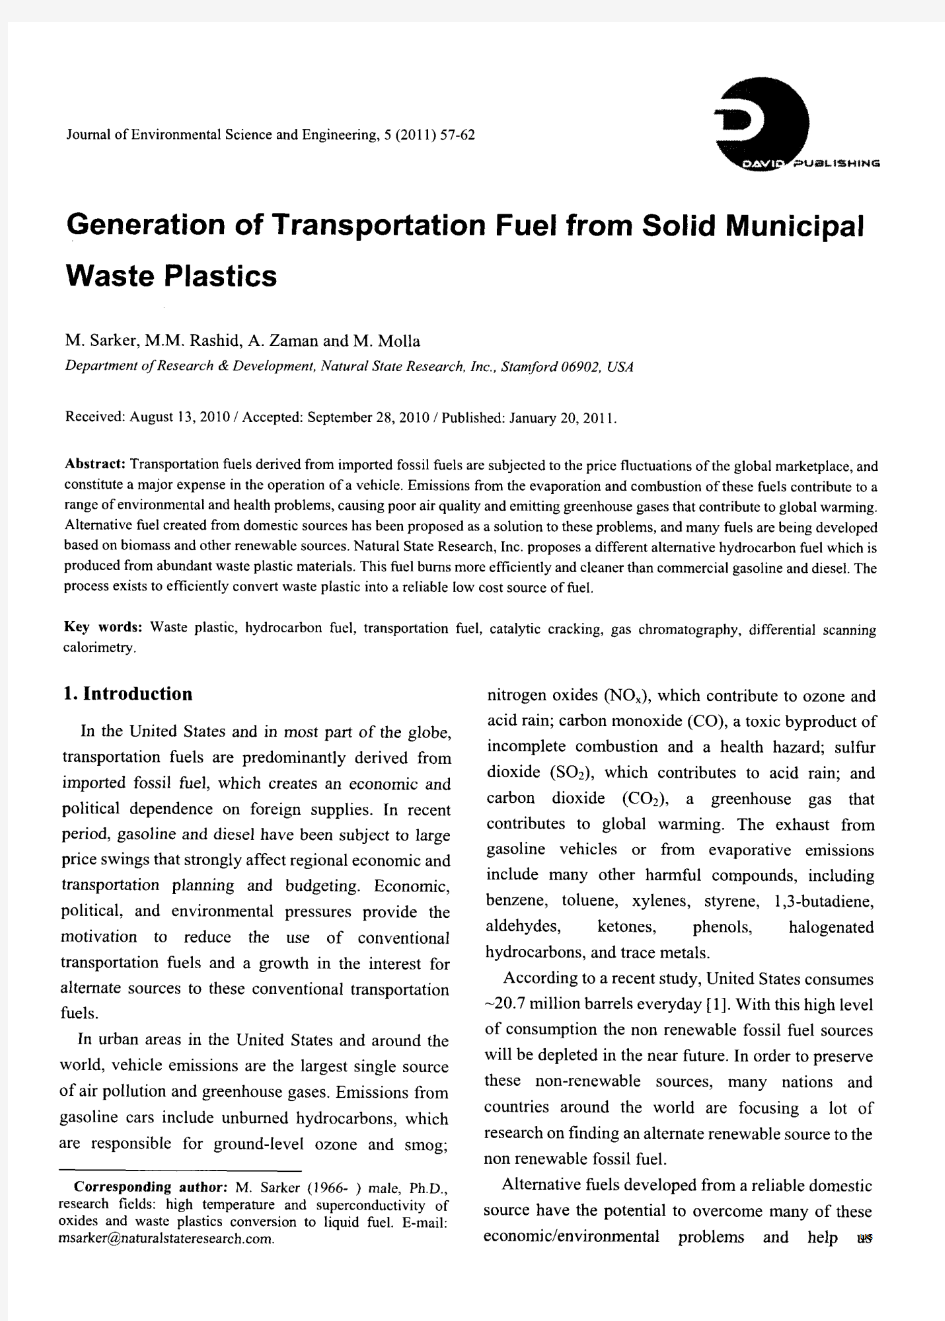 Generation of Transportation Fuel from Solid Municipal Waste Plastics